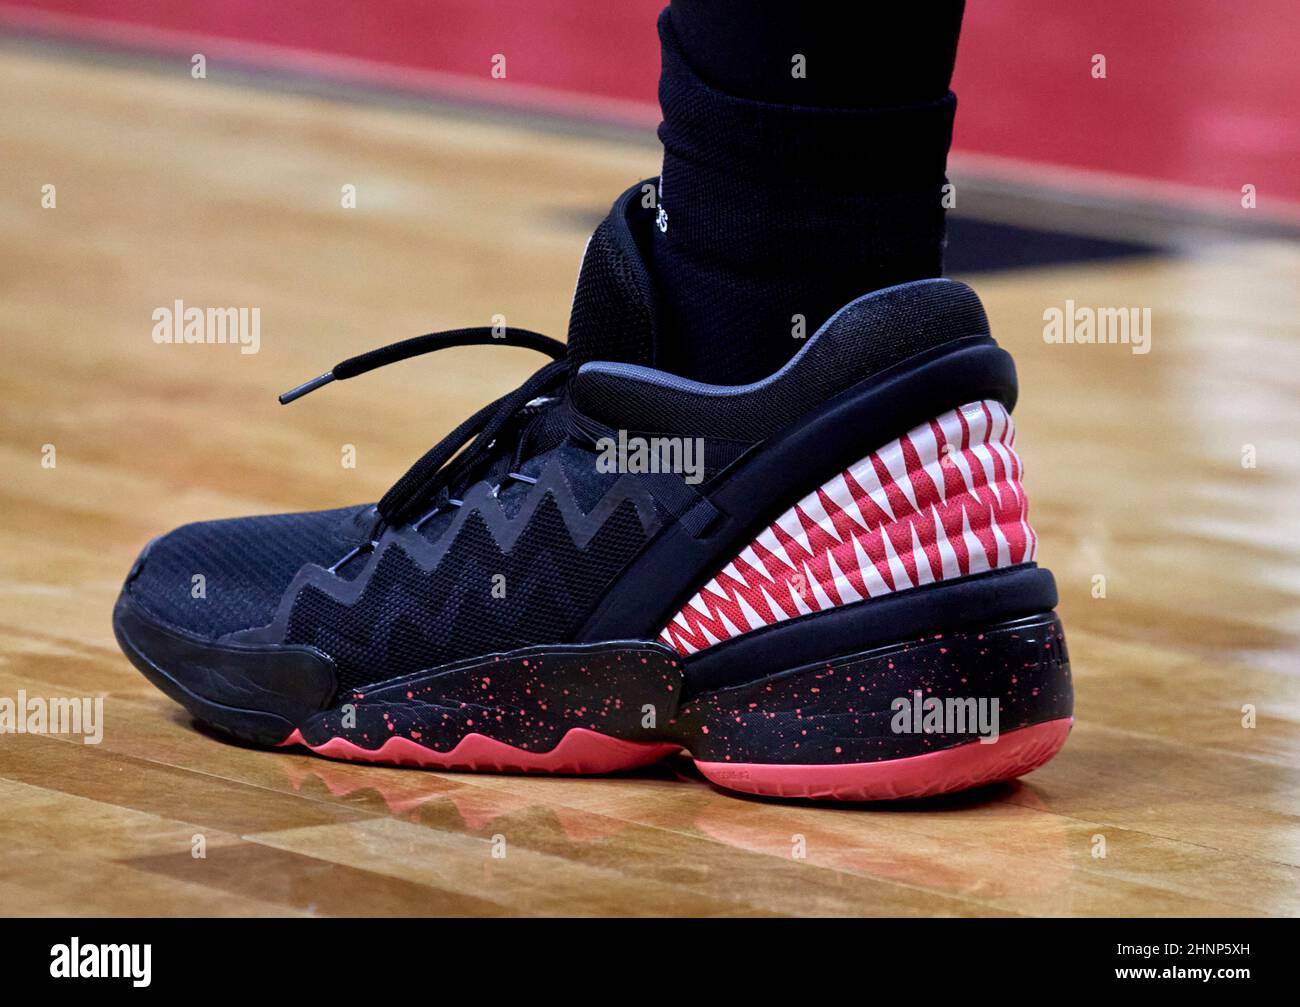 Zapatillas de baloncesto nike fotografías e imágenes de alta resolución -  Alamy